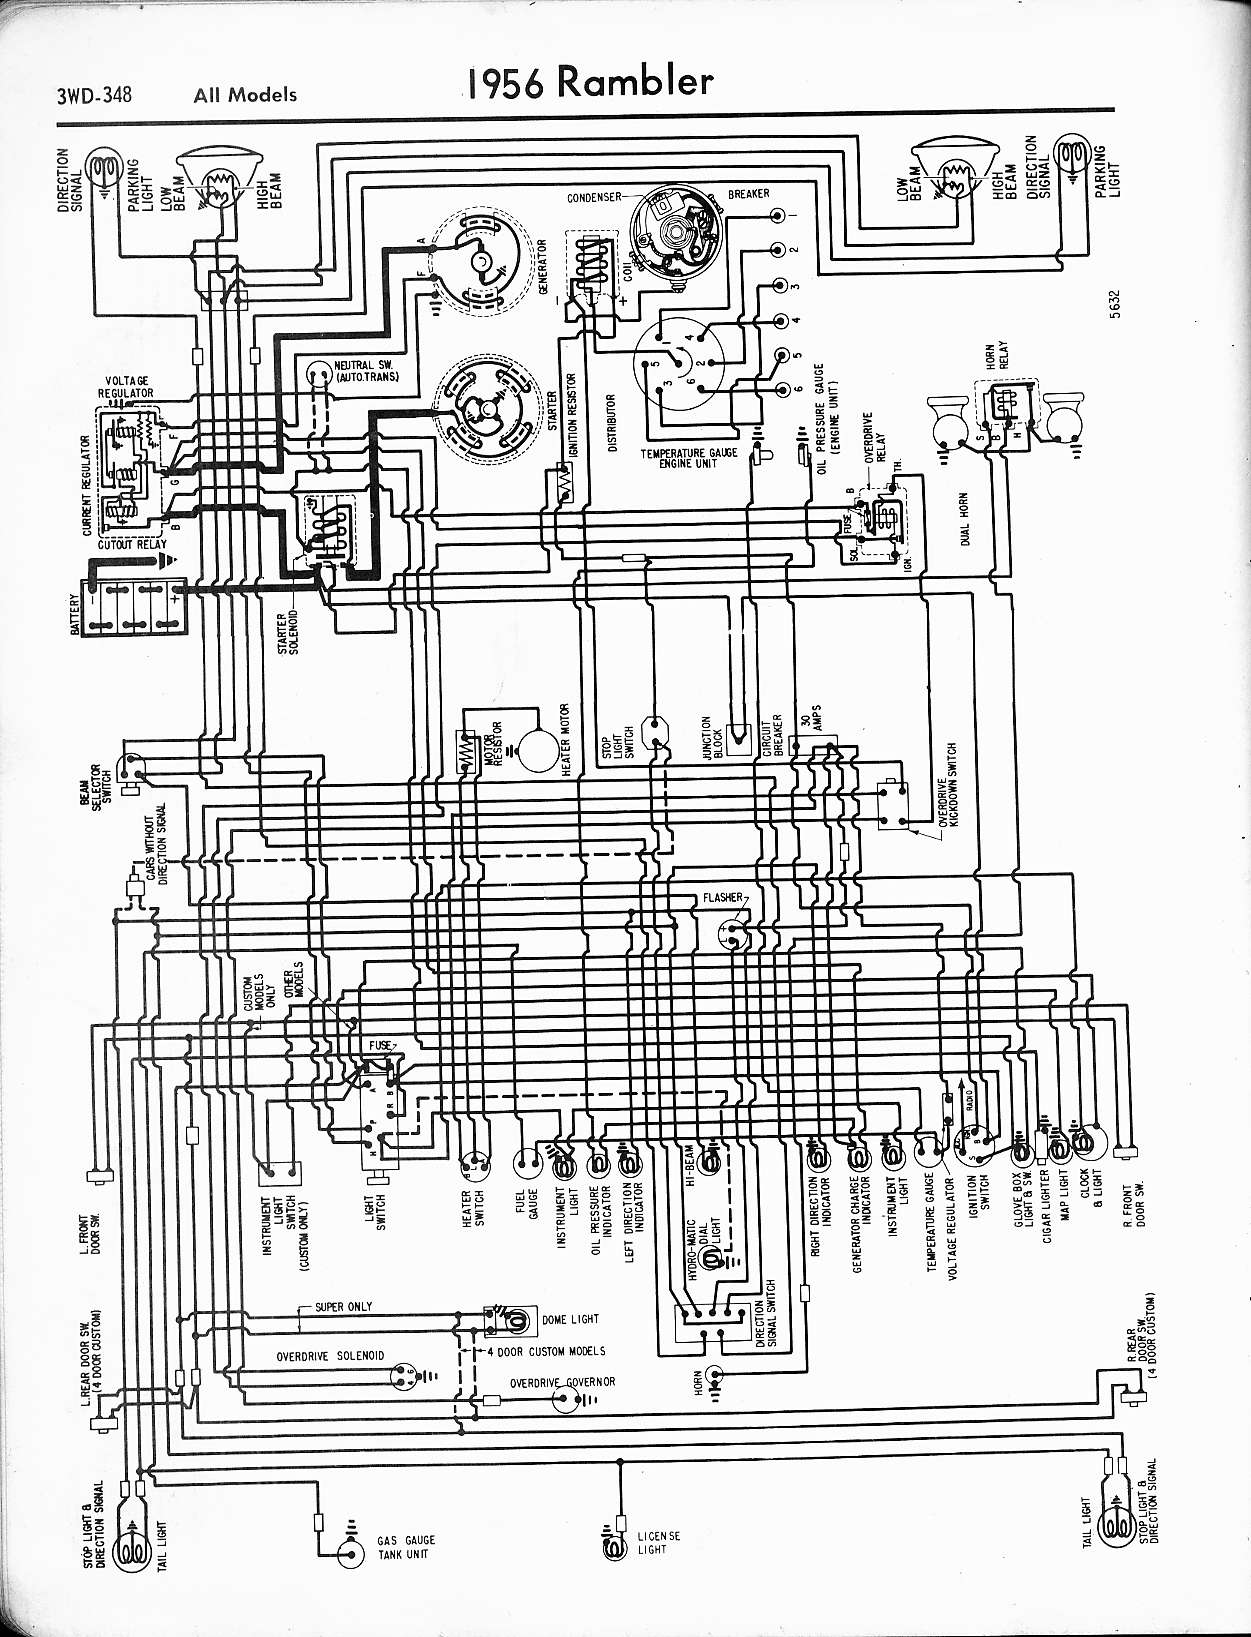 Rambler wiring diagrams - The Old Car Manual Project